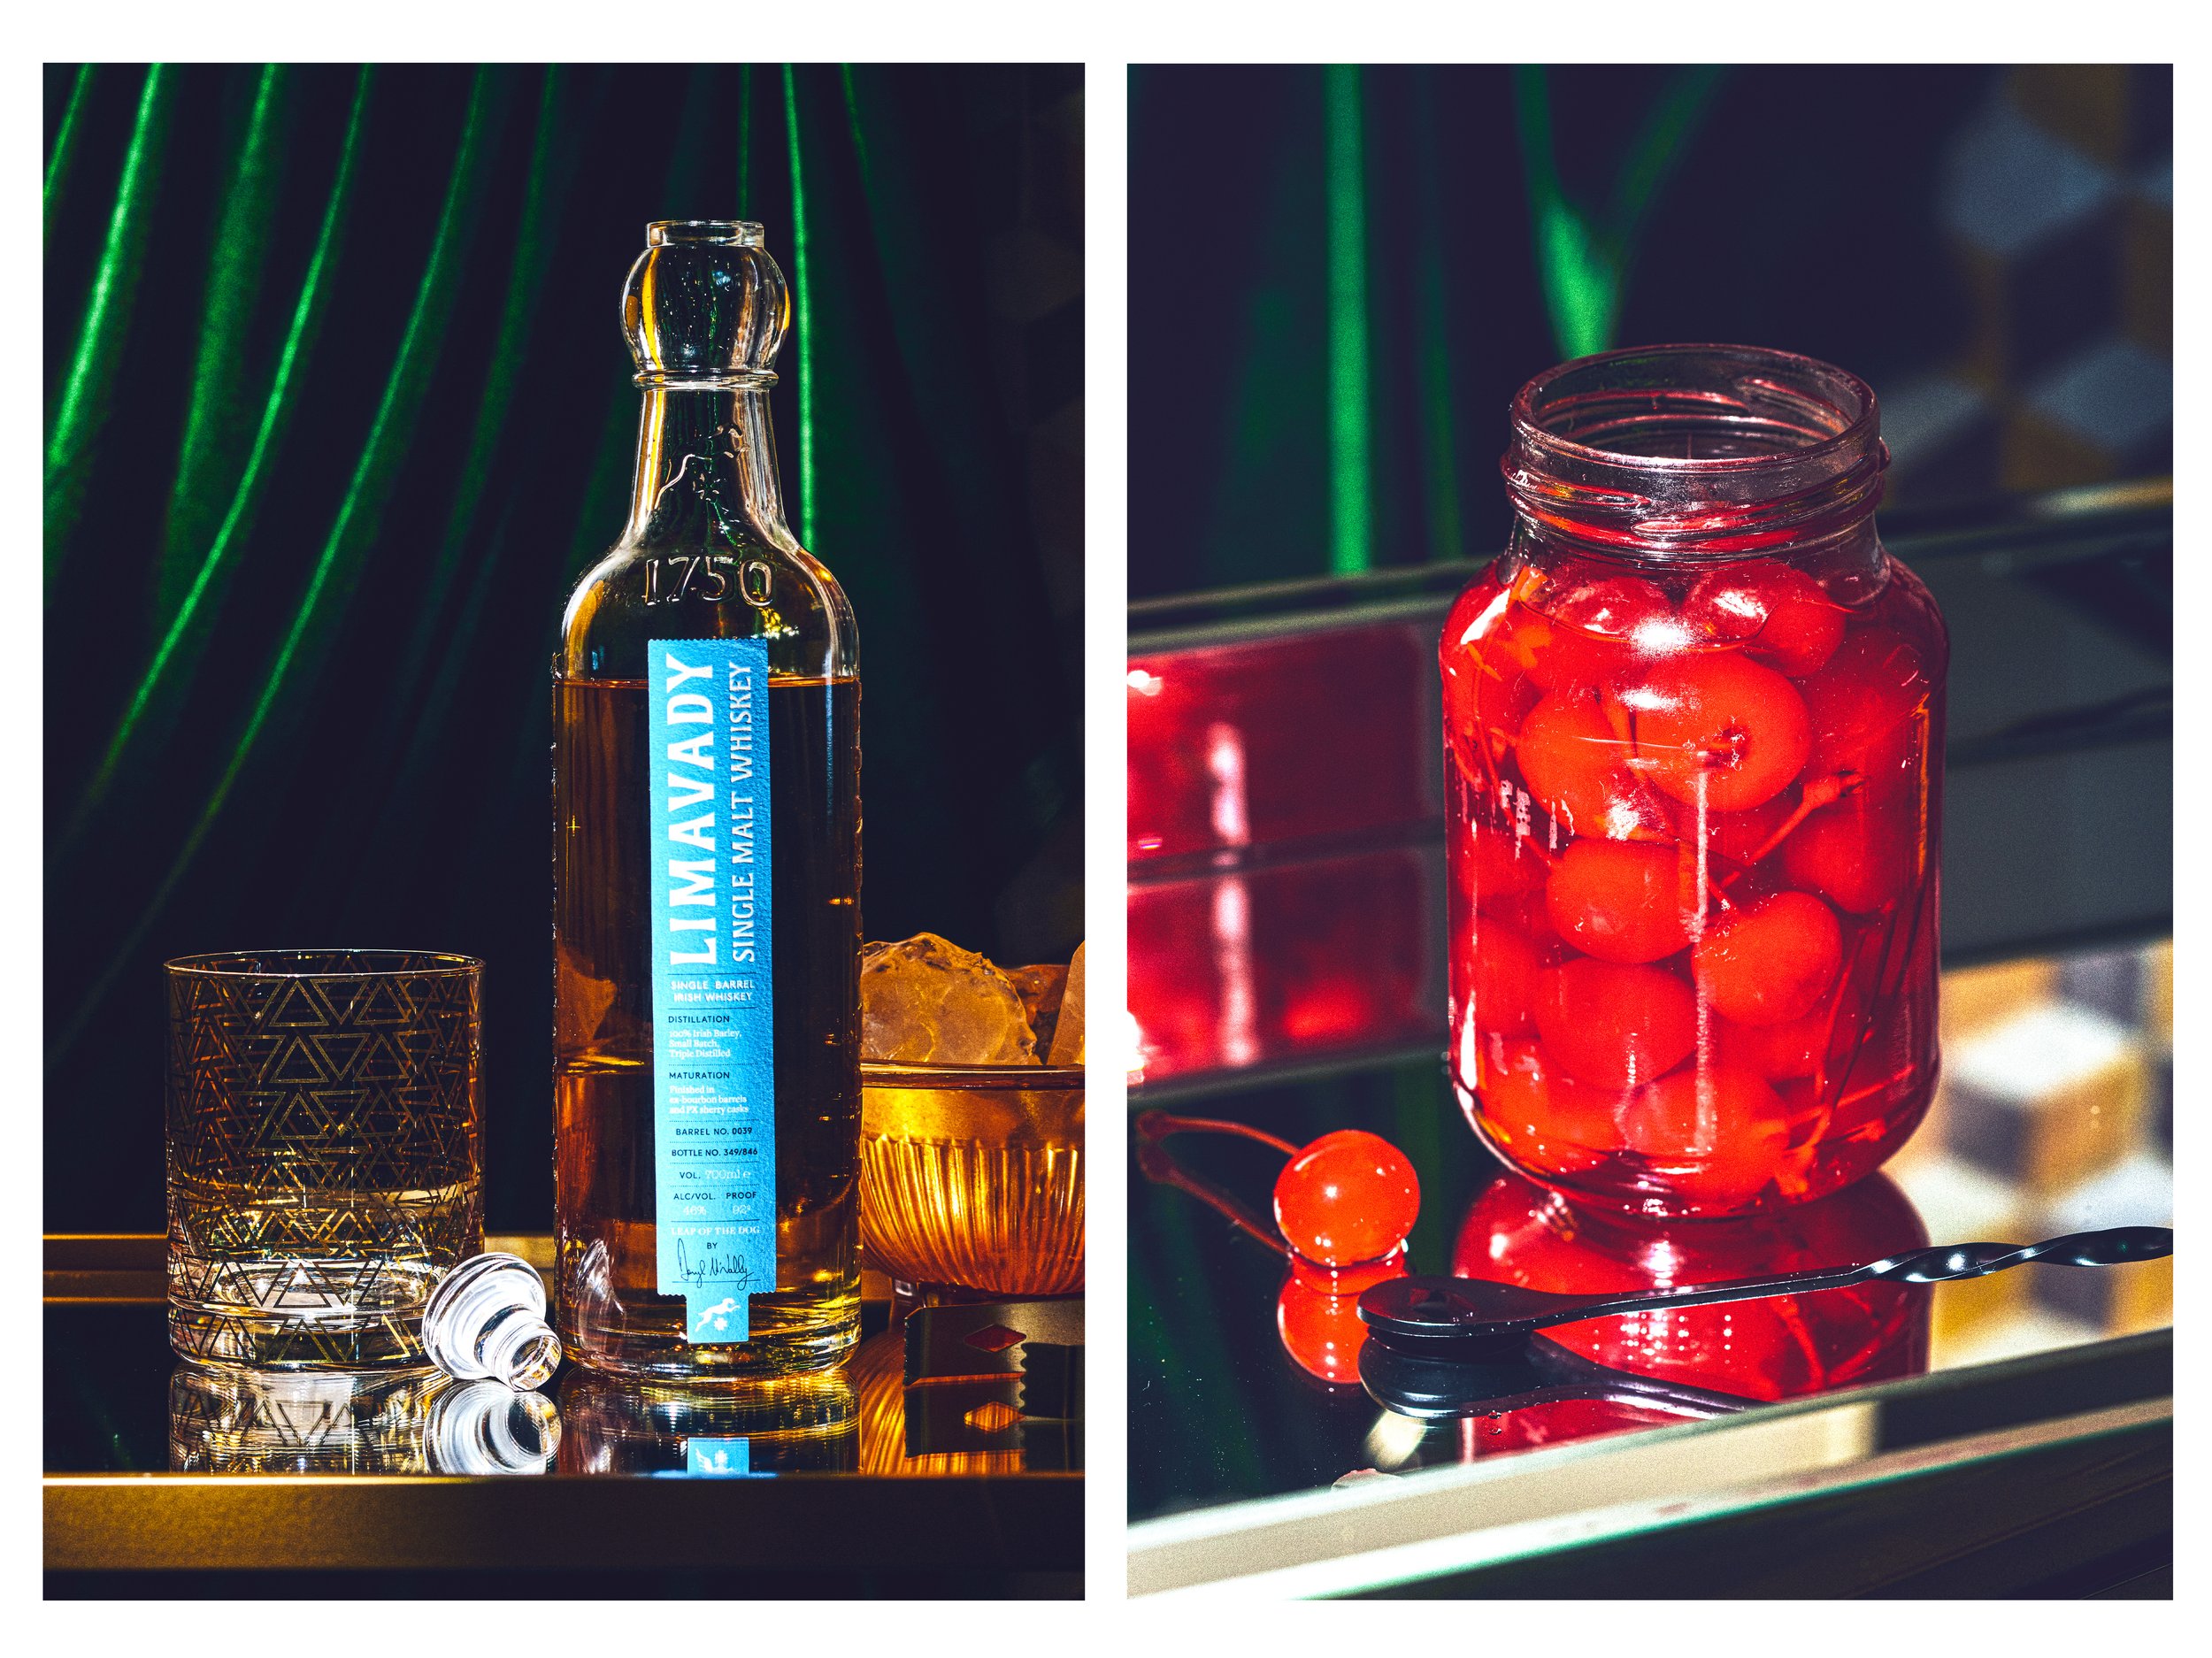 Bottle-Of-Limavady-Irish-Single-malt-whiskey-and-Maracshino-Cherries.jpeg